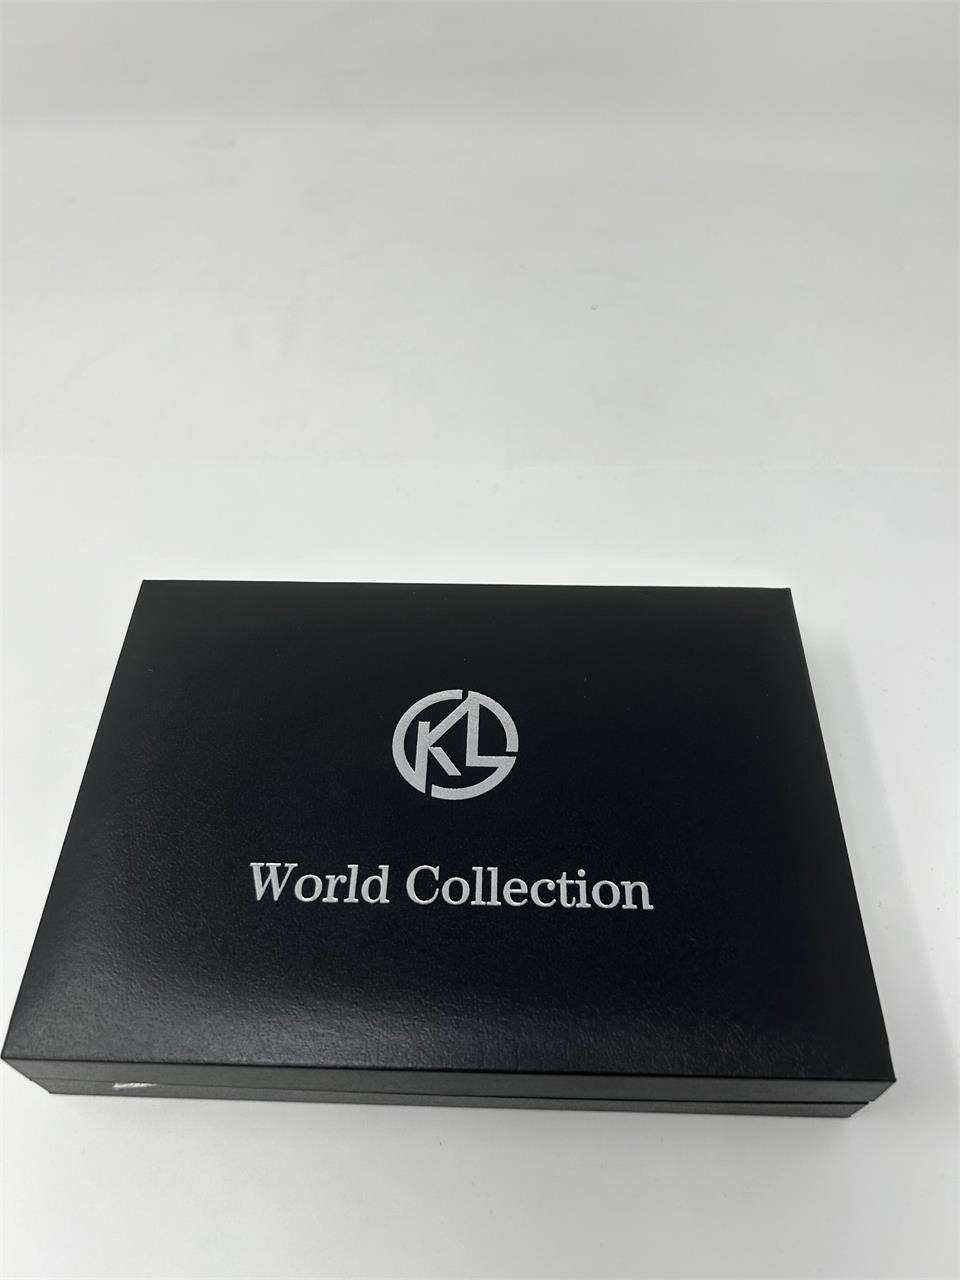 World collection Kobe Bryant coin